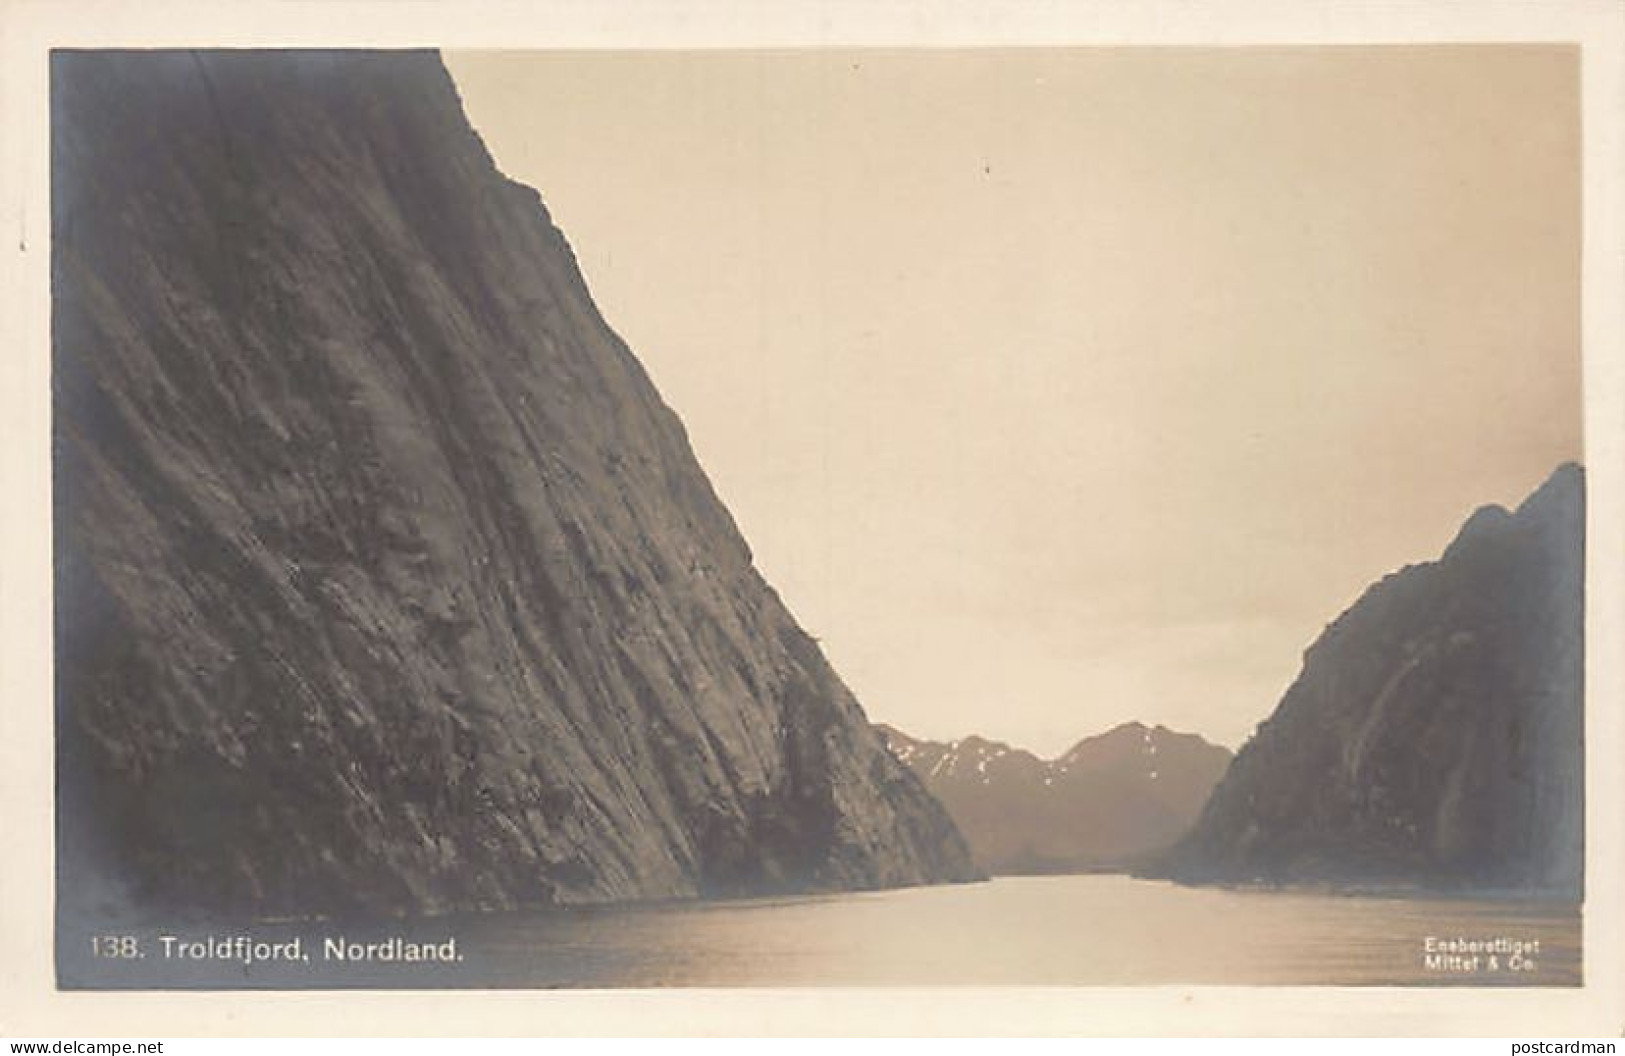 Norway - Troldfjord, Nordland - Publ. MIttet & Co. 138 - Norway